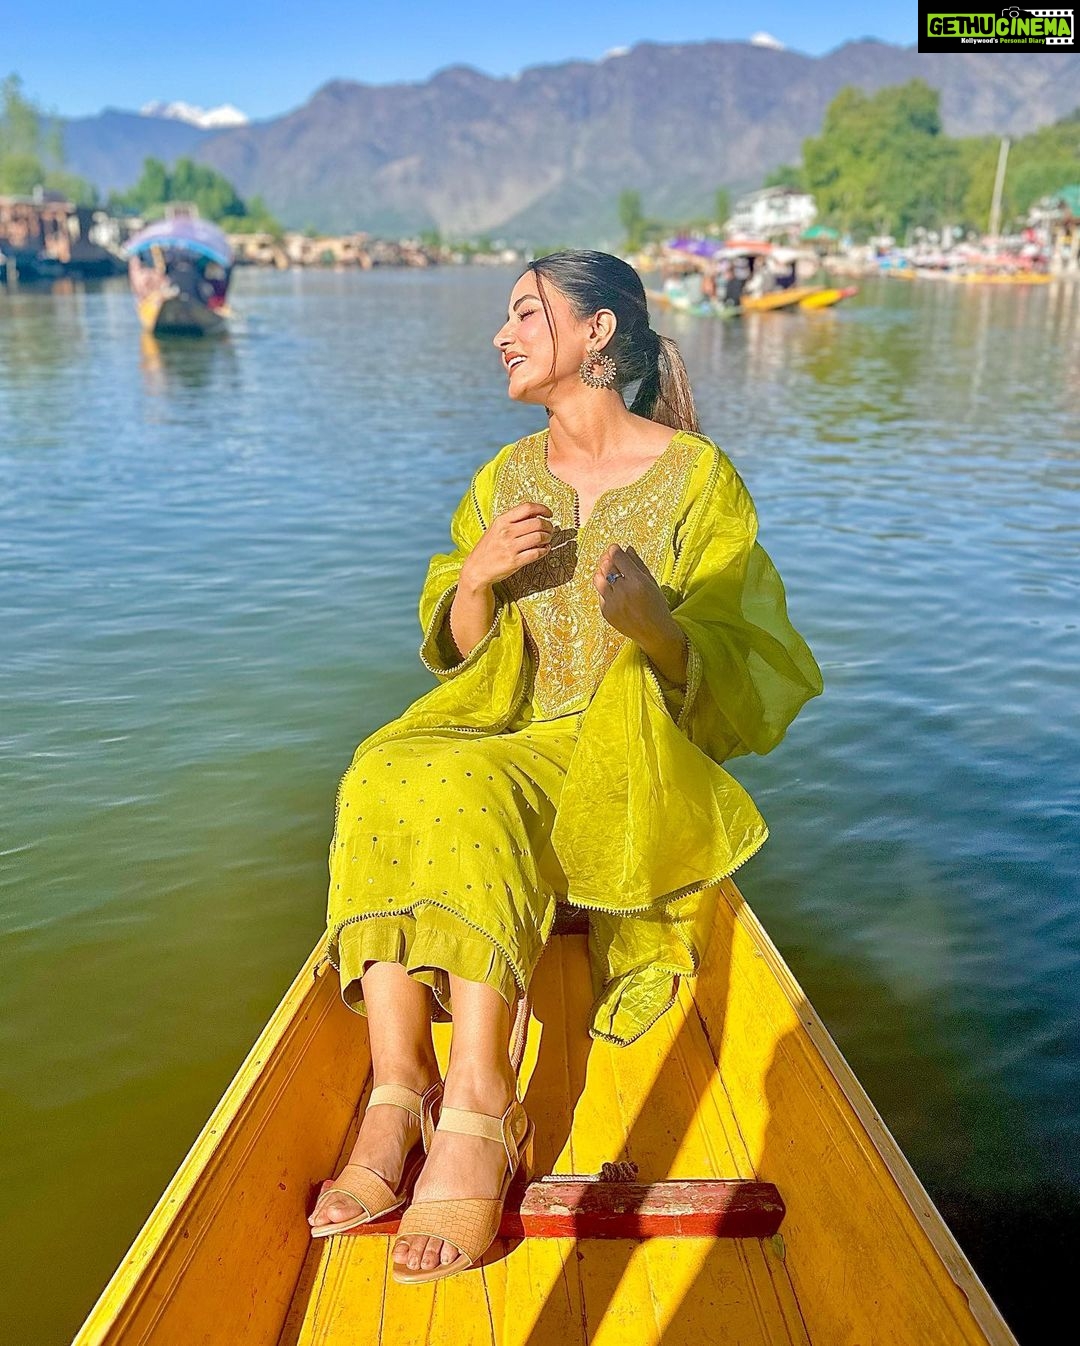 Hina Khan - 1 Million Likes - Most Liked Instagram Photos